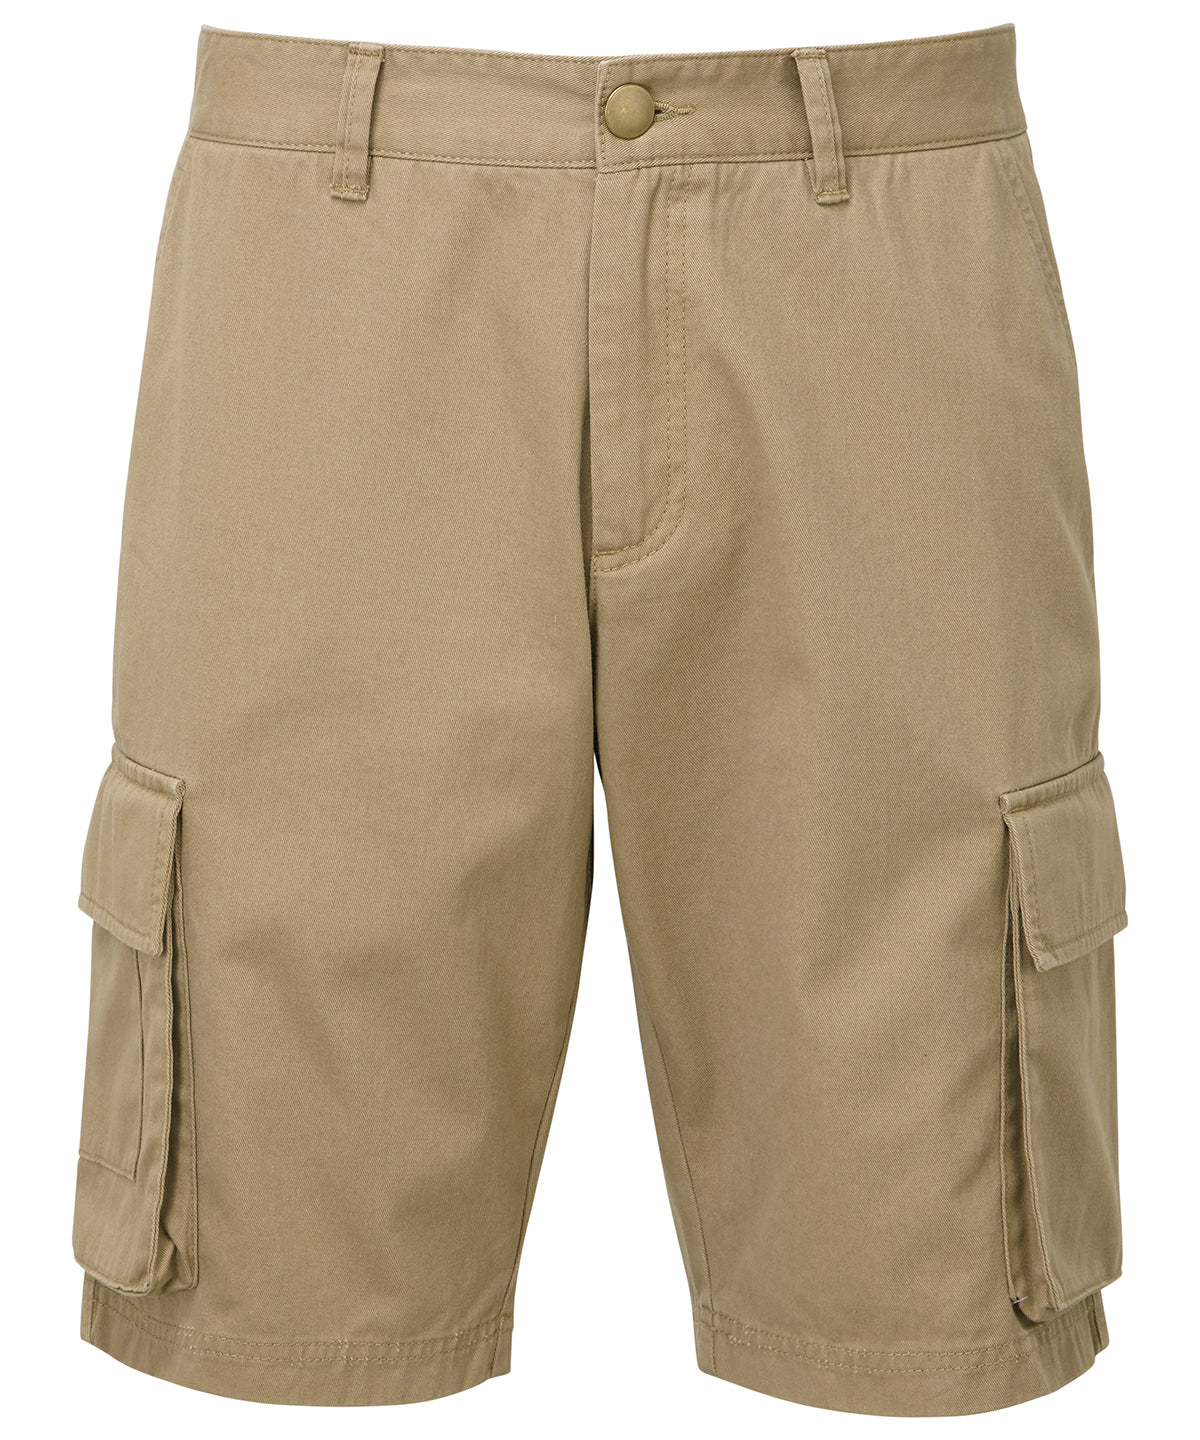 Personalised Shorts - Black Asquith & Fox Men's cargo shorts